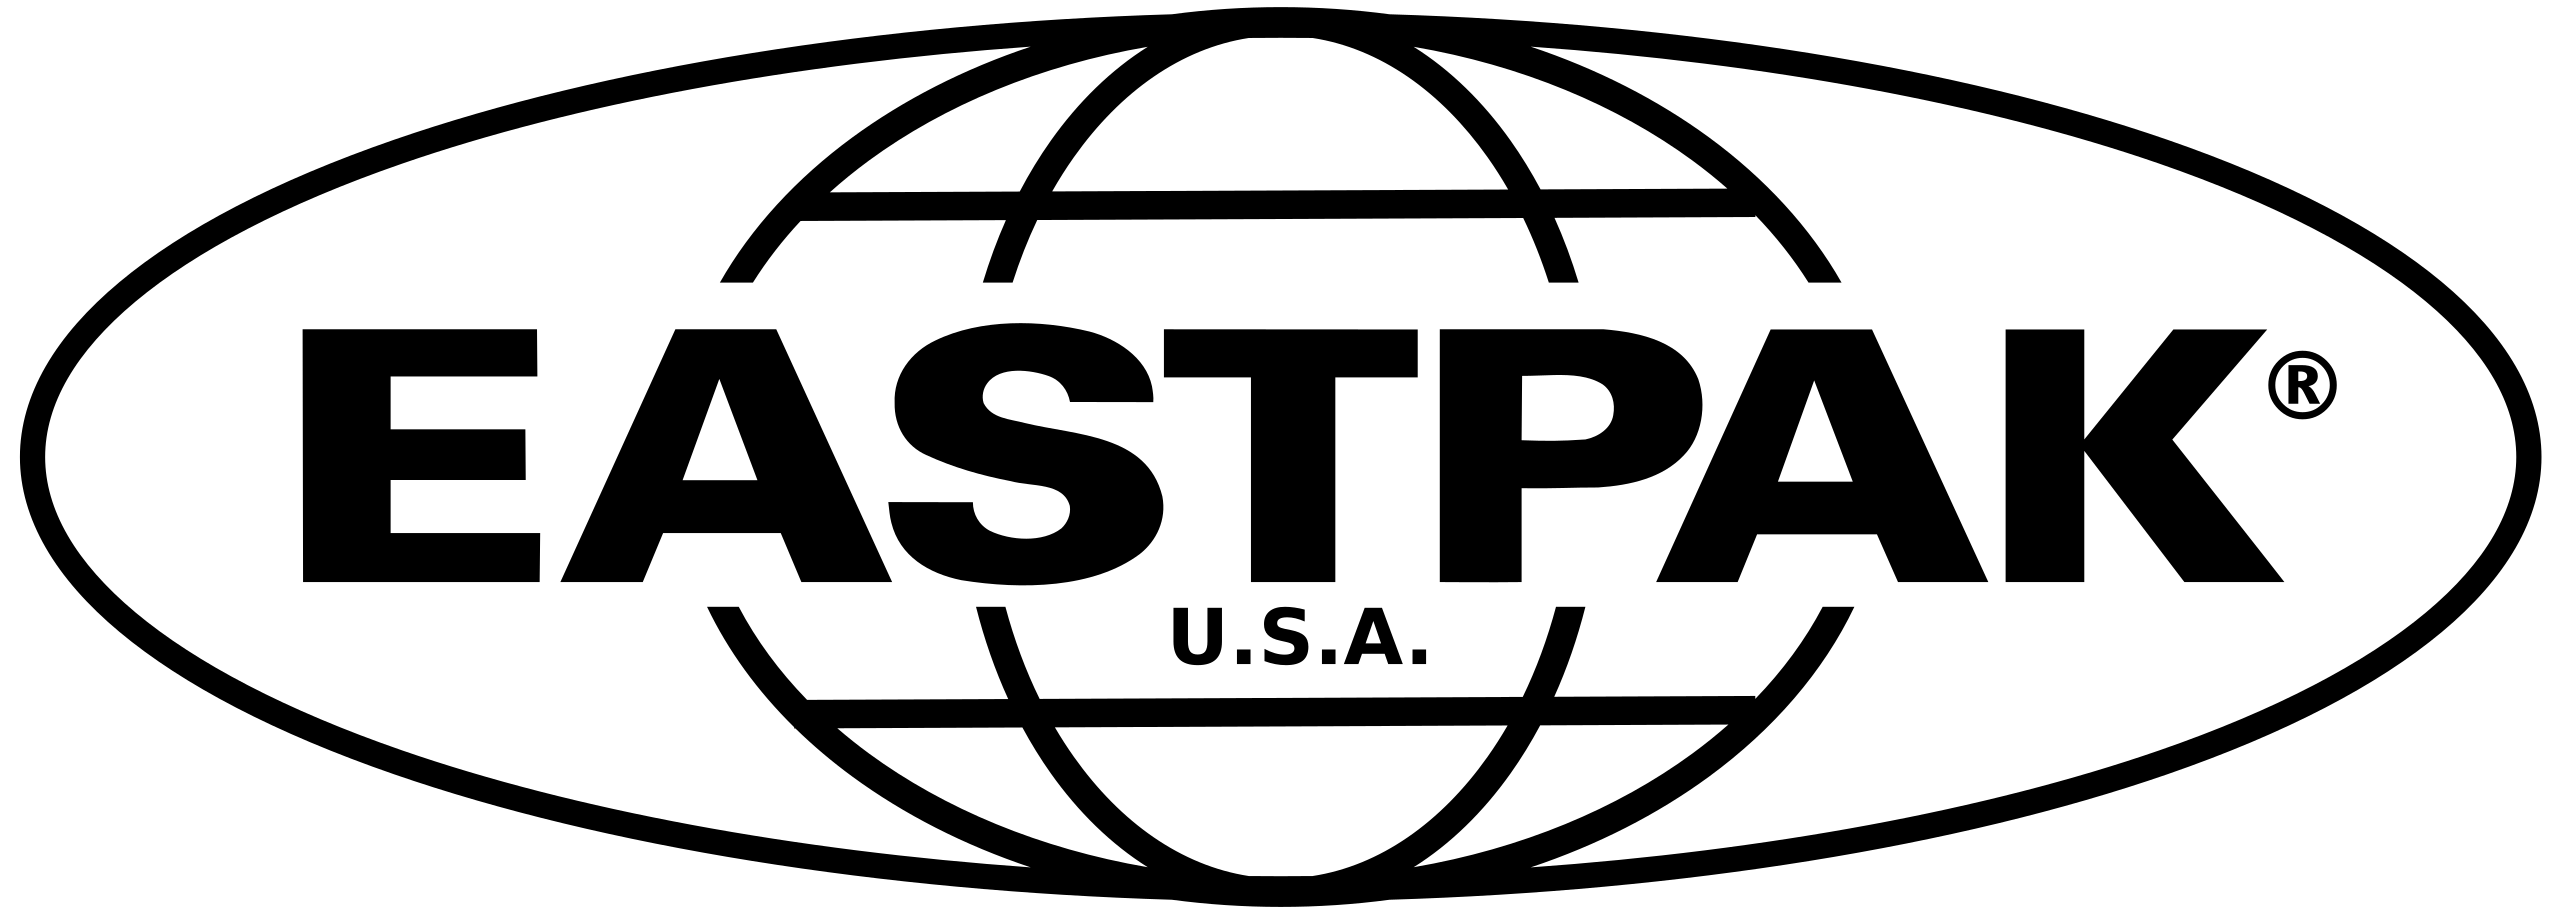 File:Eastpak logo.svg - Wikimedia Commons